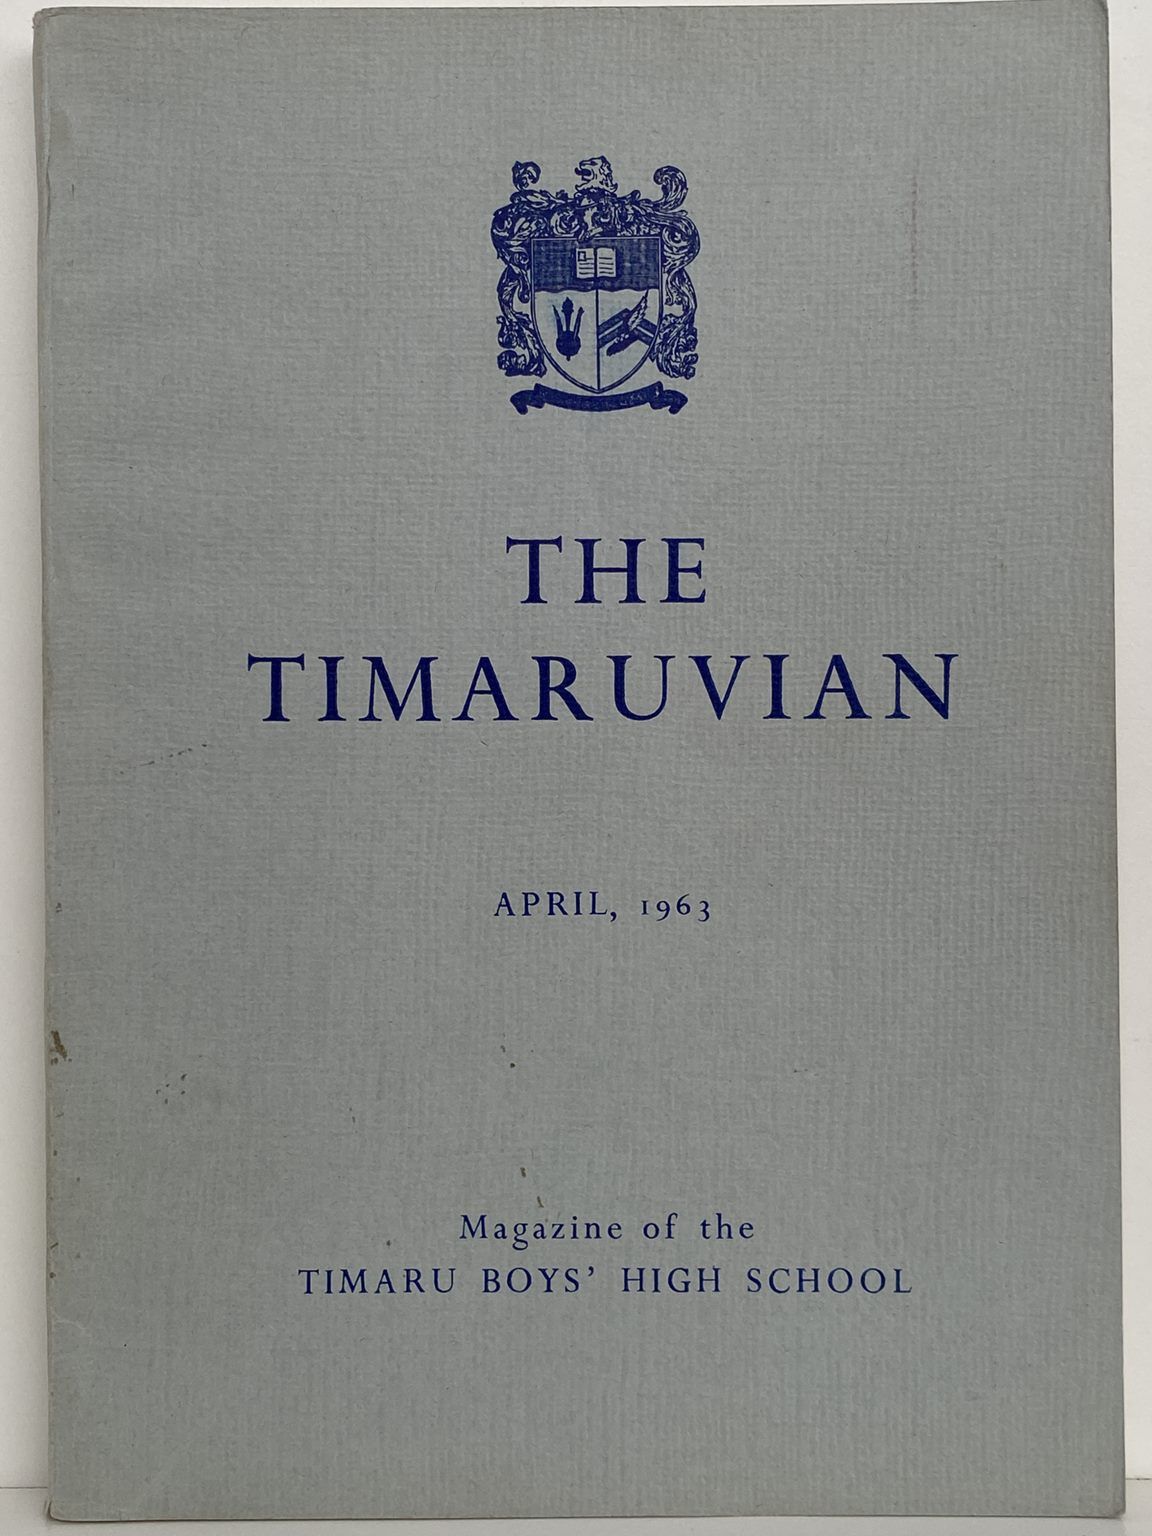 THE TIMARUVIAN: Magazine of the Timaru Boys High School - April 1963